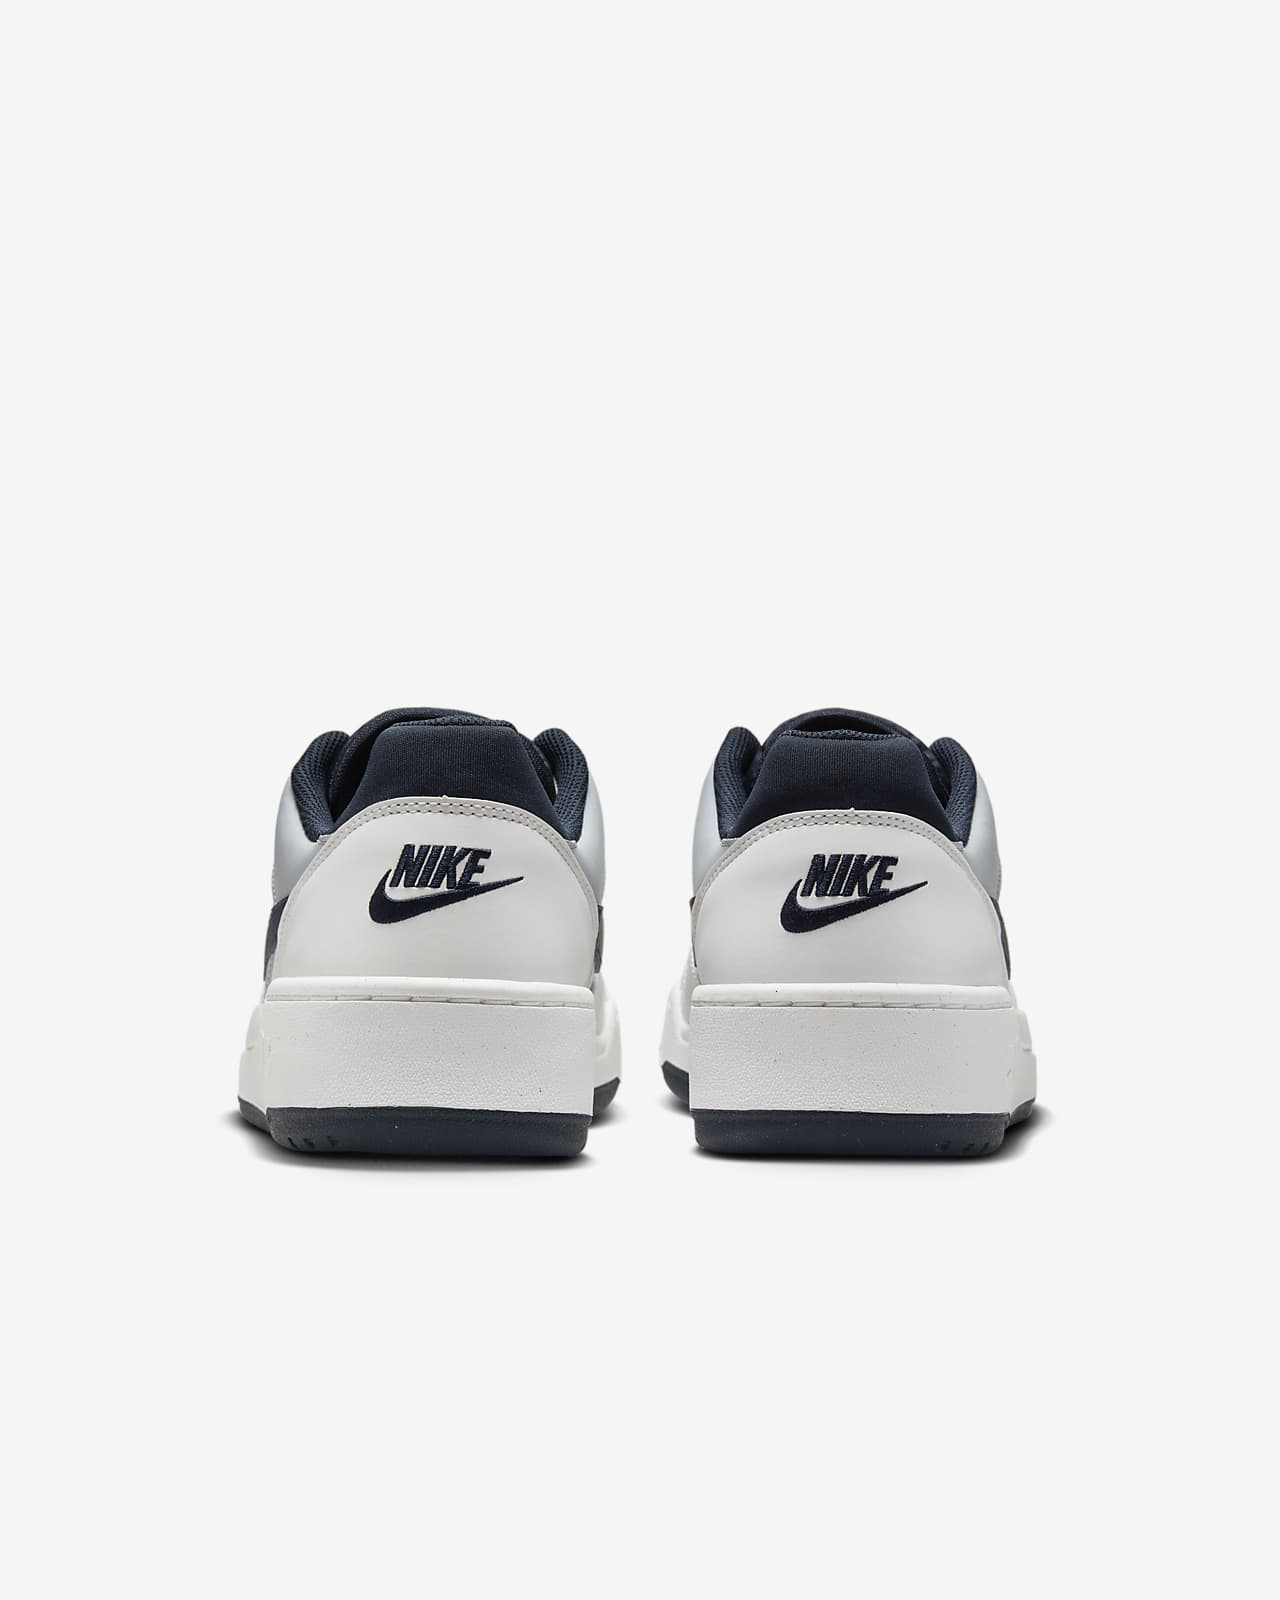 Nike Full Force Low Men's Shoes